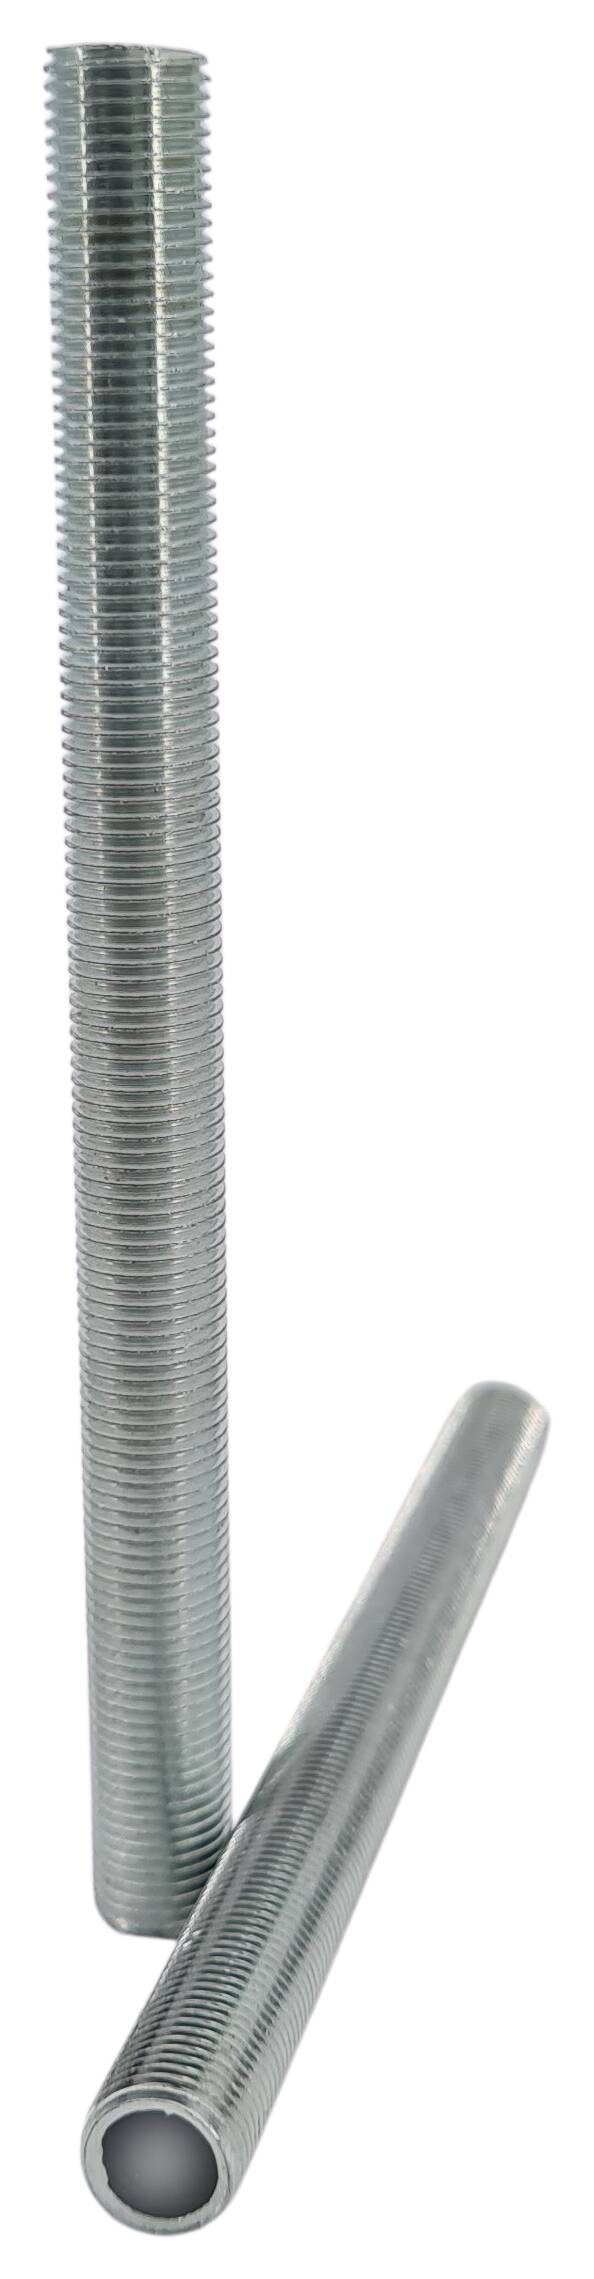 iron thread tube M10x1x125 round zinc